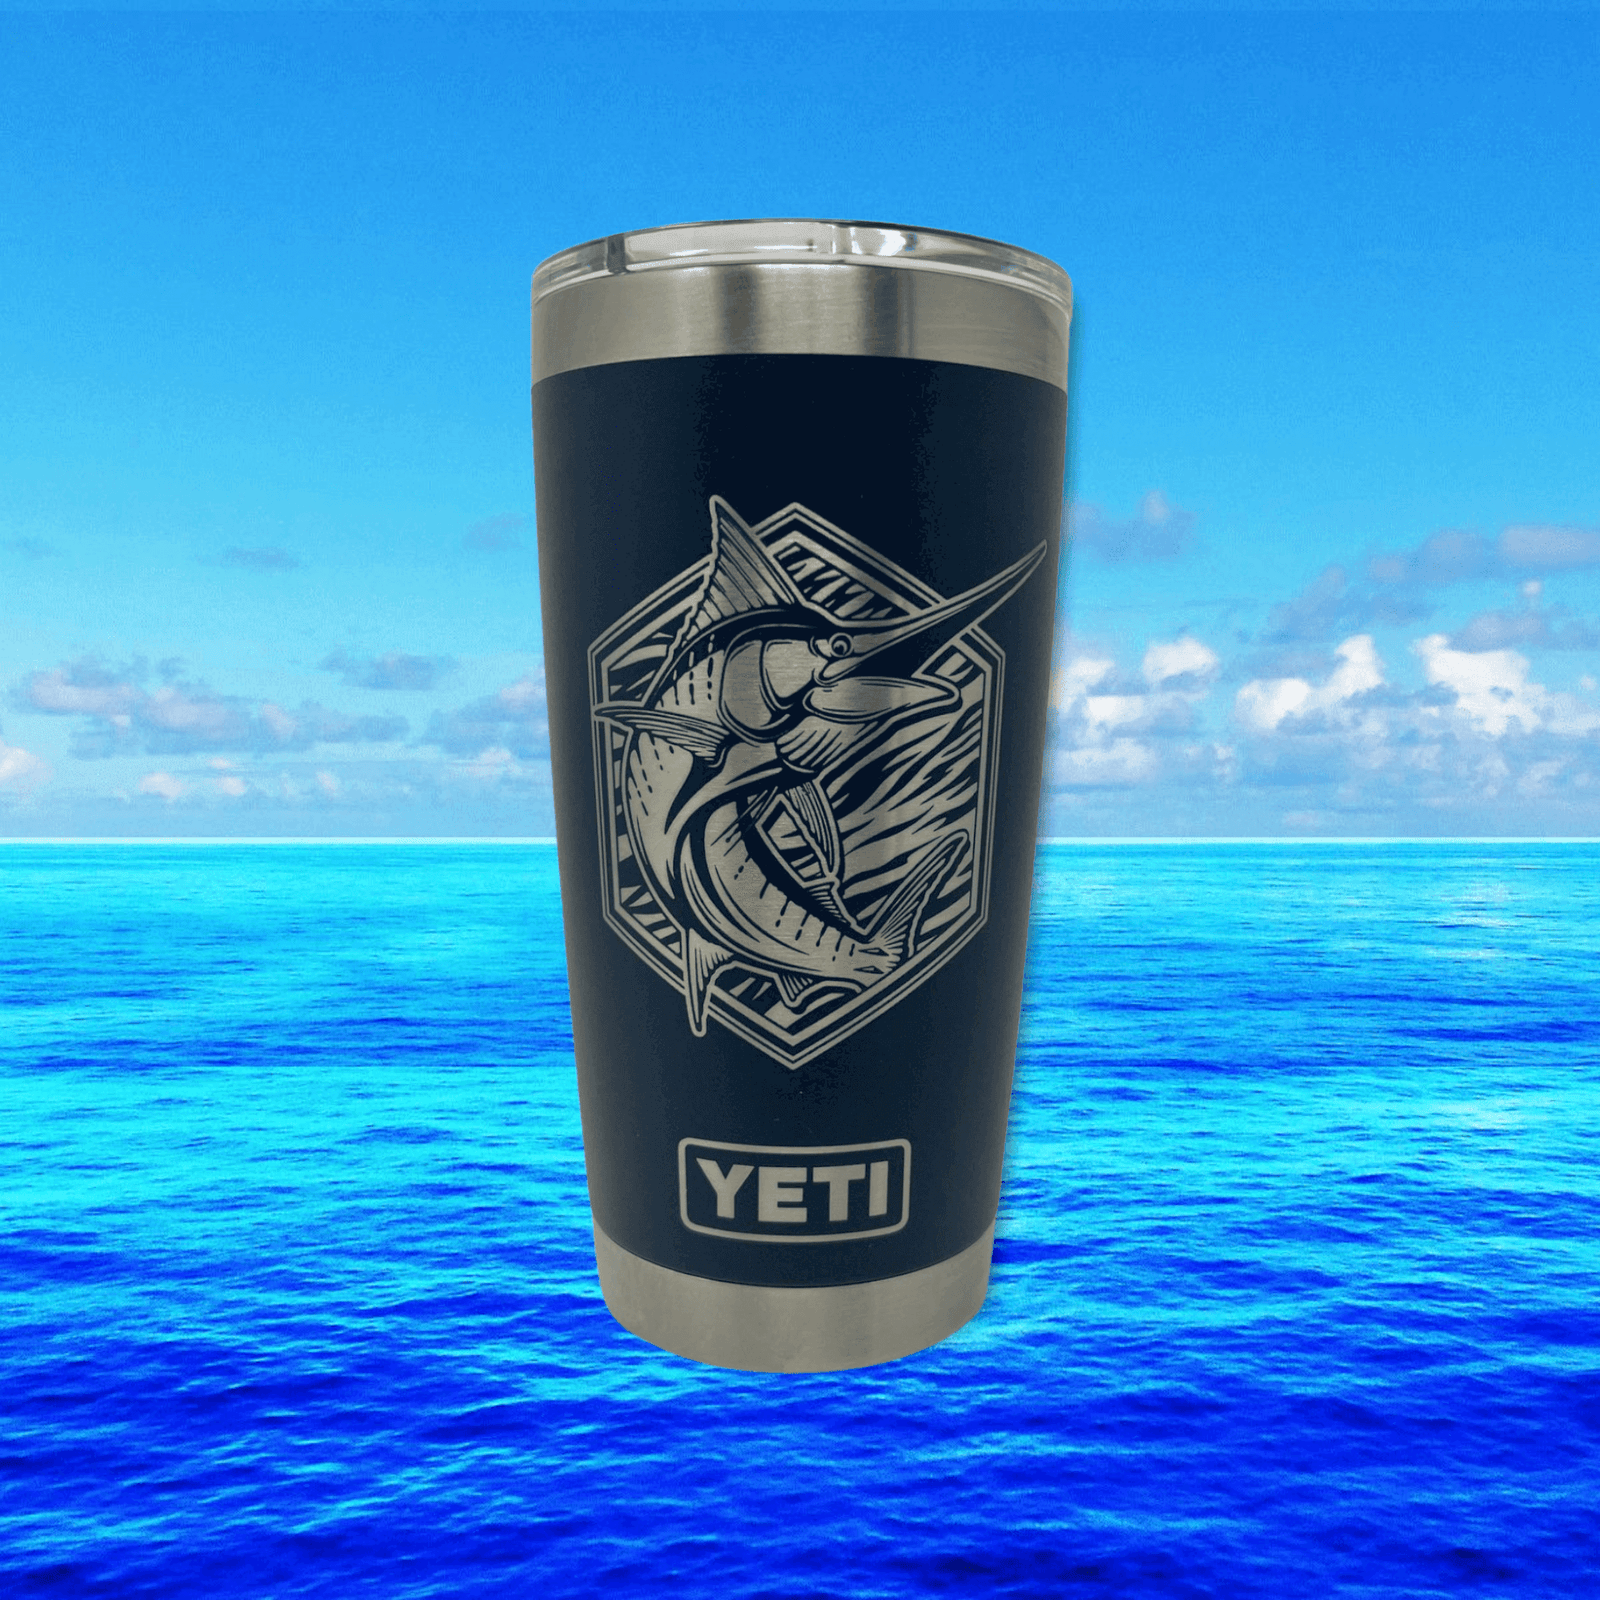 High Tides Good Vibes - Boating Engraved YETI Tumbler - Black / 20oz